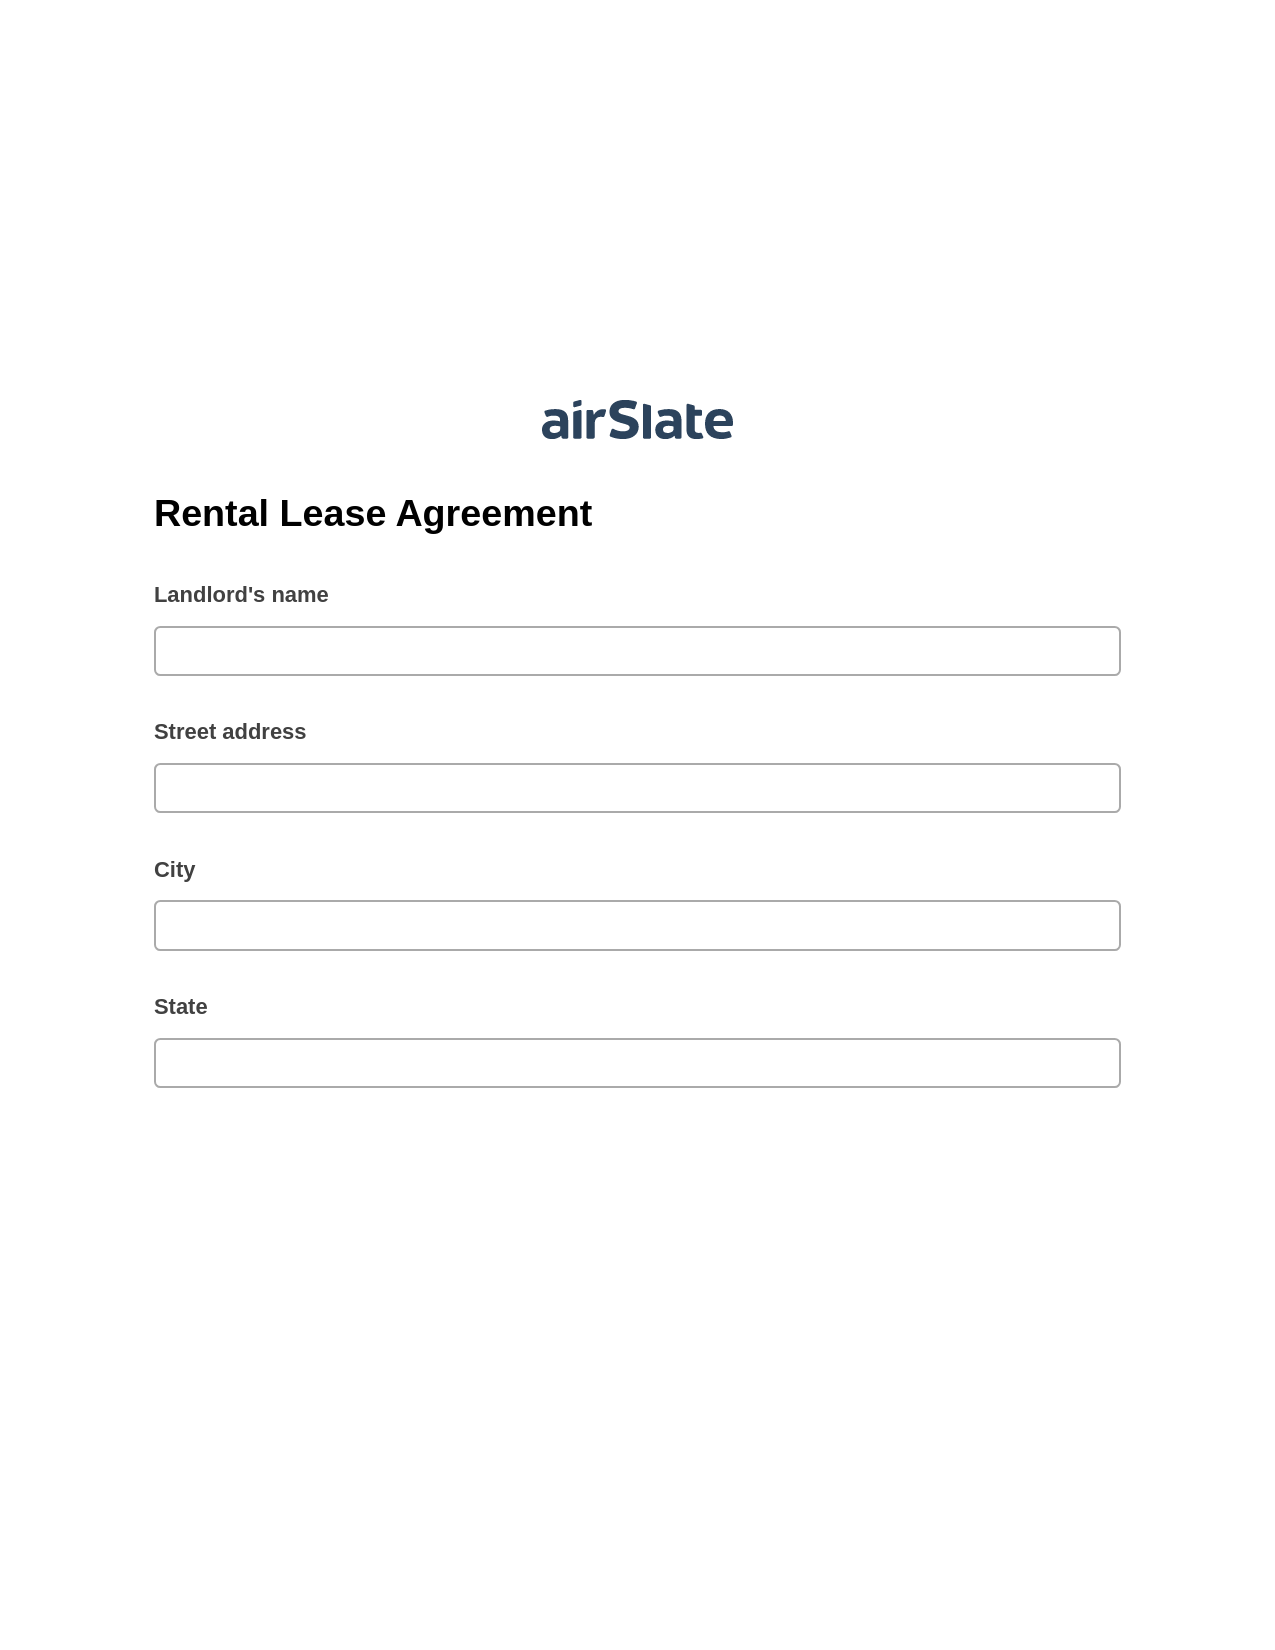 Rental Lease Agreement Pre-fill from Google Sheet Dropdown Options Bot, Create slate bot, Post-finish Document Bot